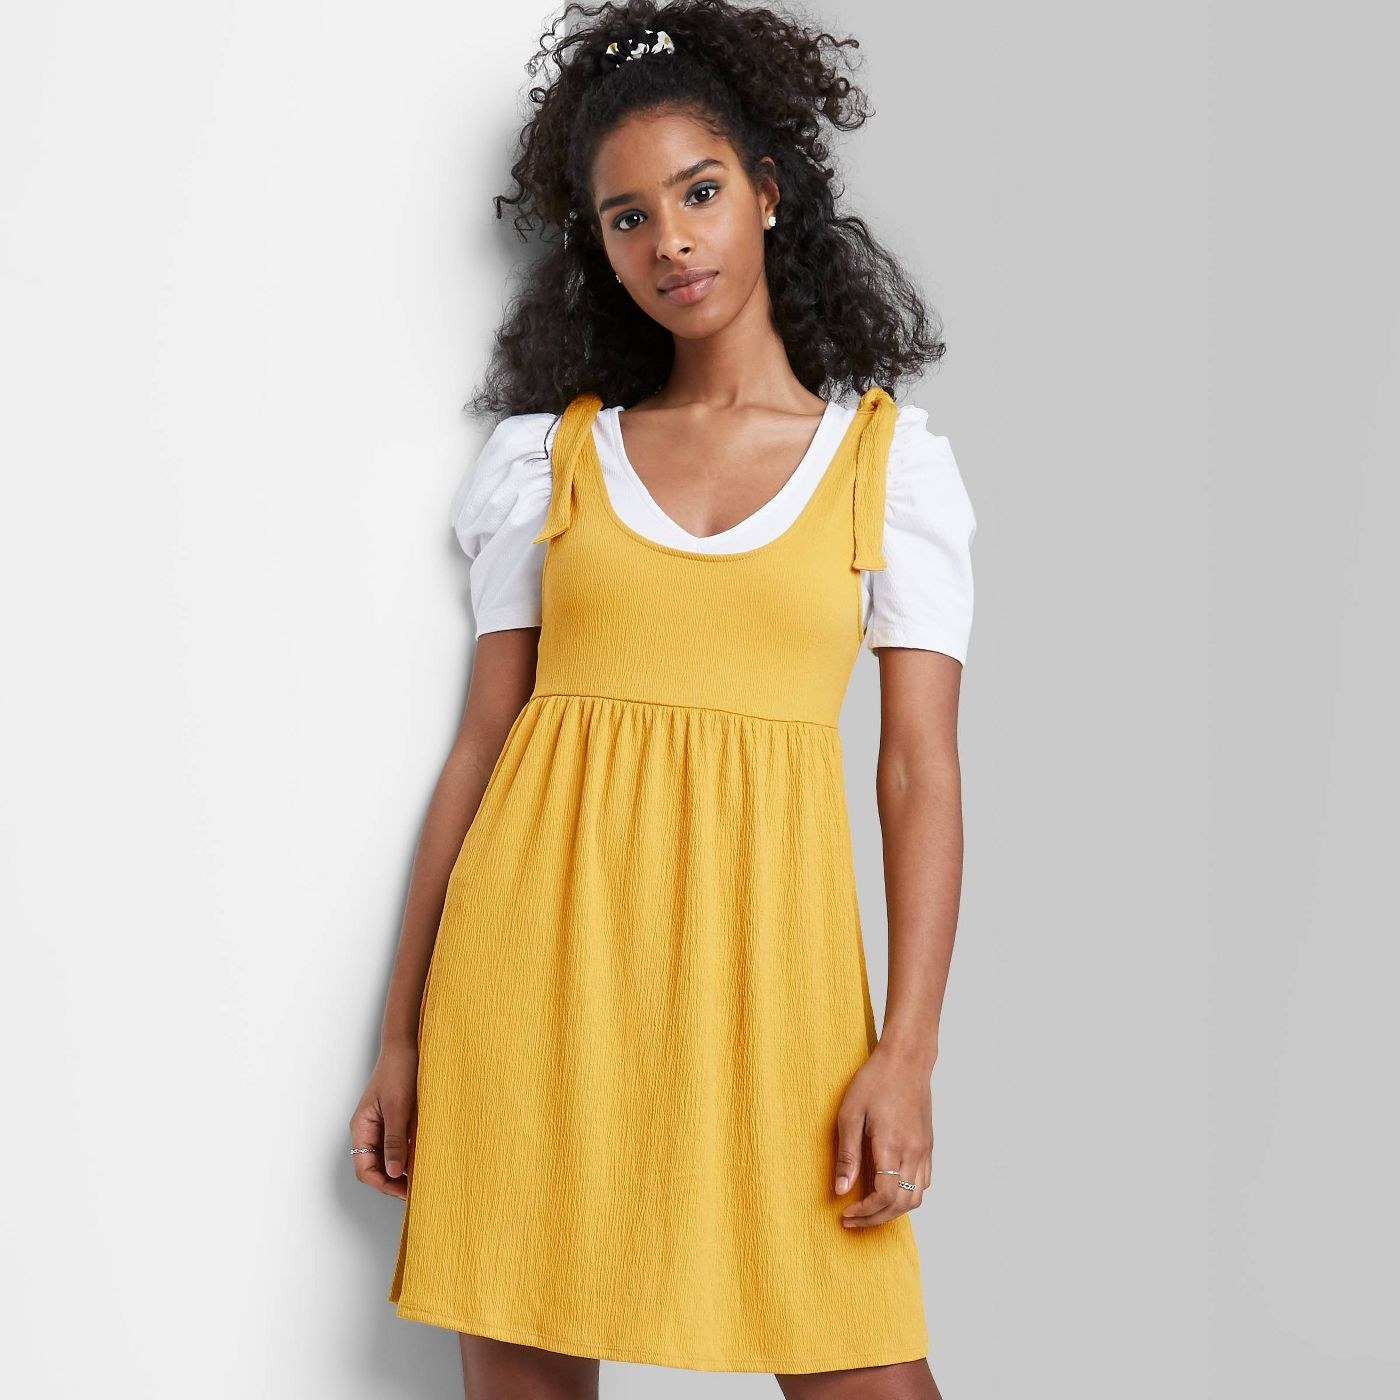 Model wearing yellow sleeveless dress, stops above the knee